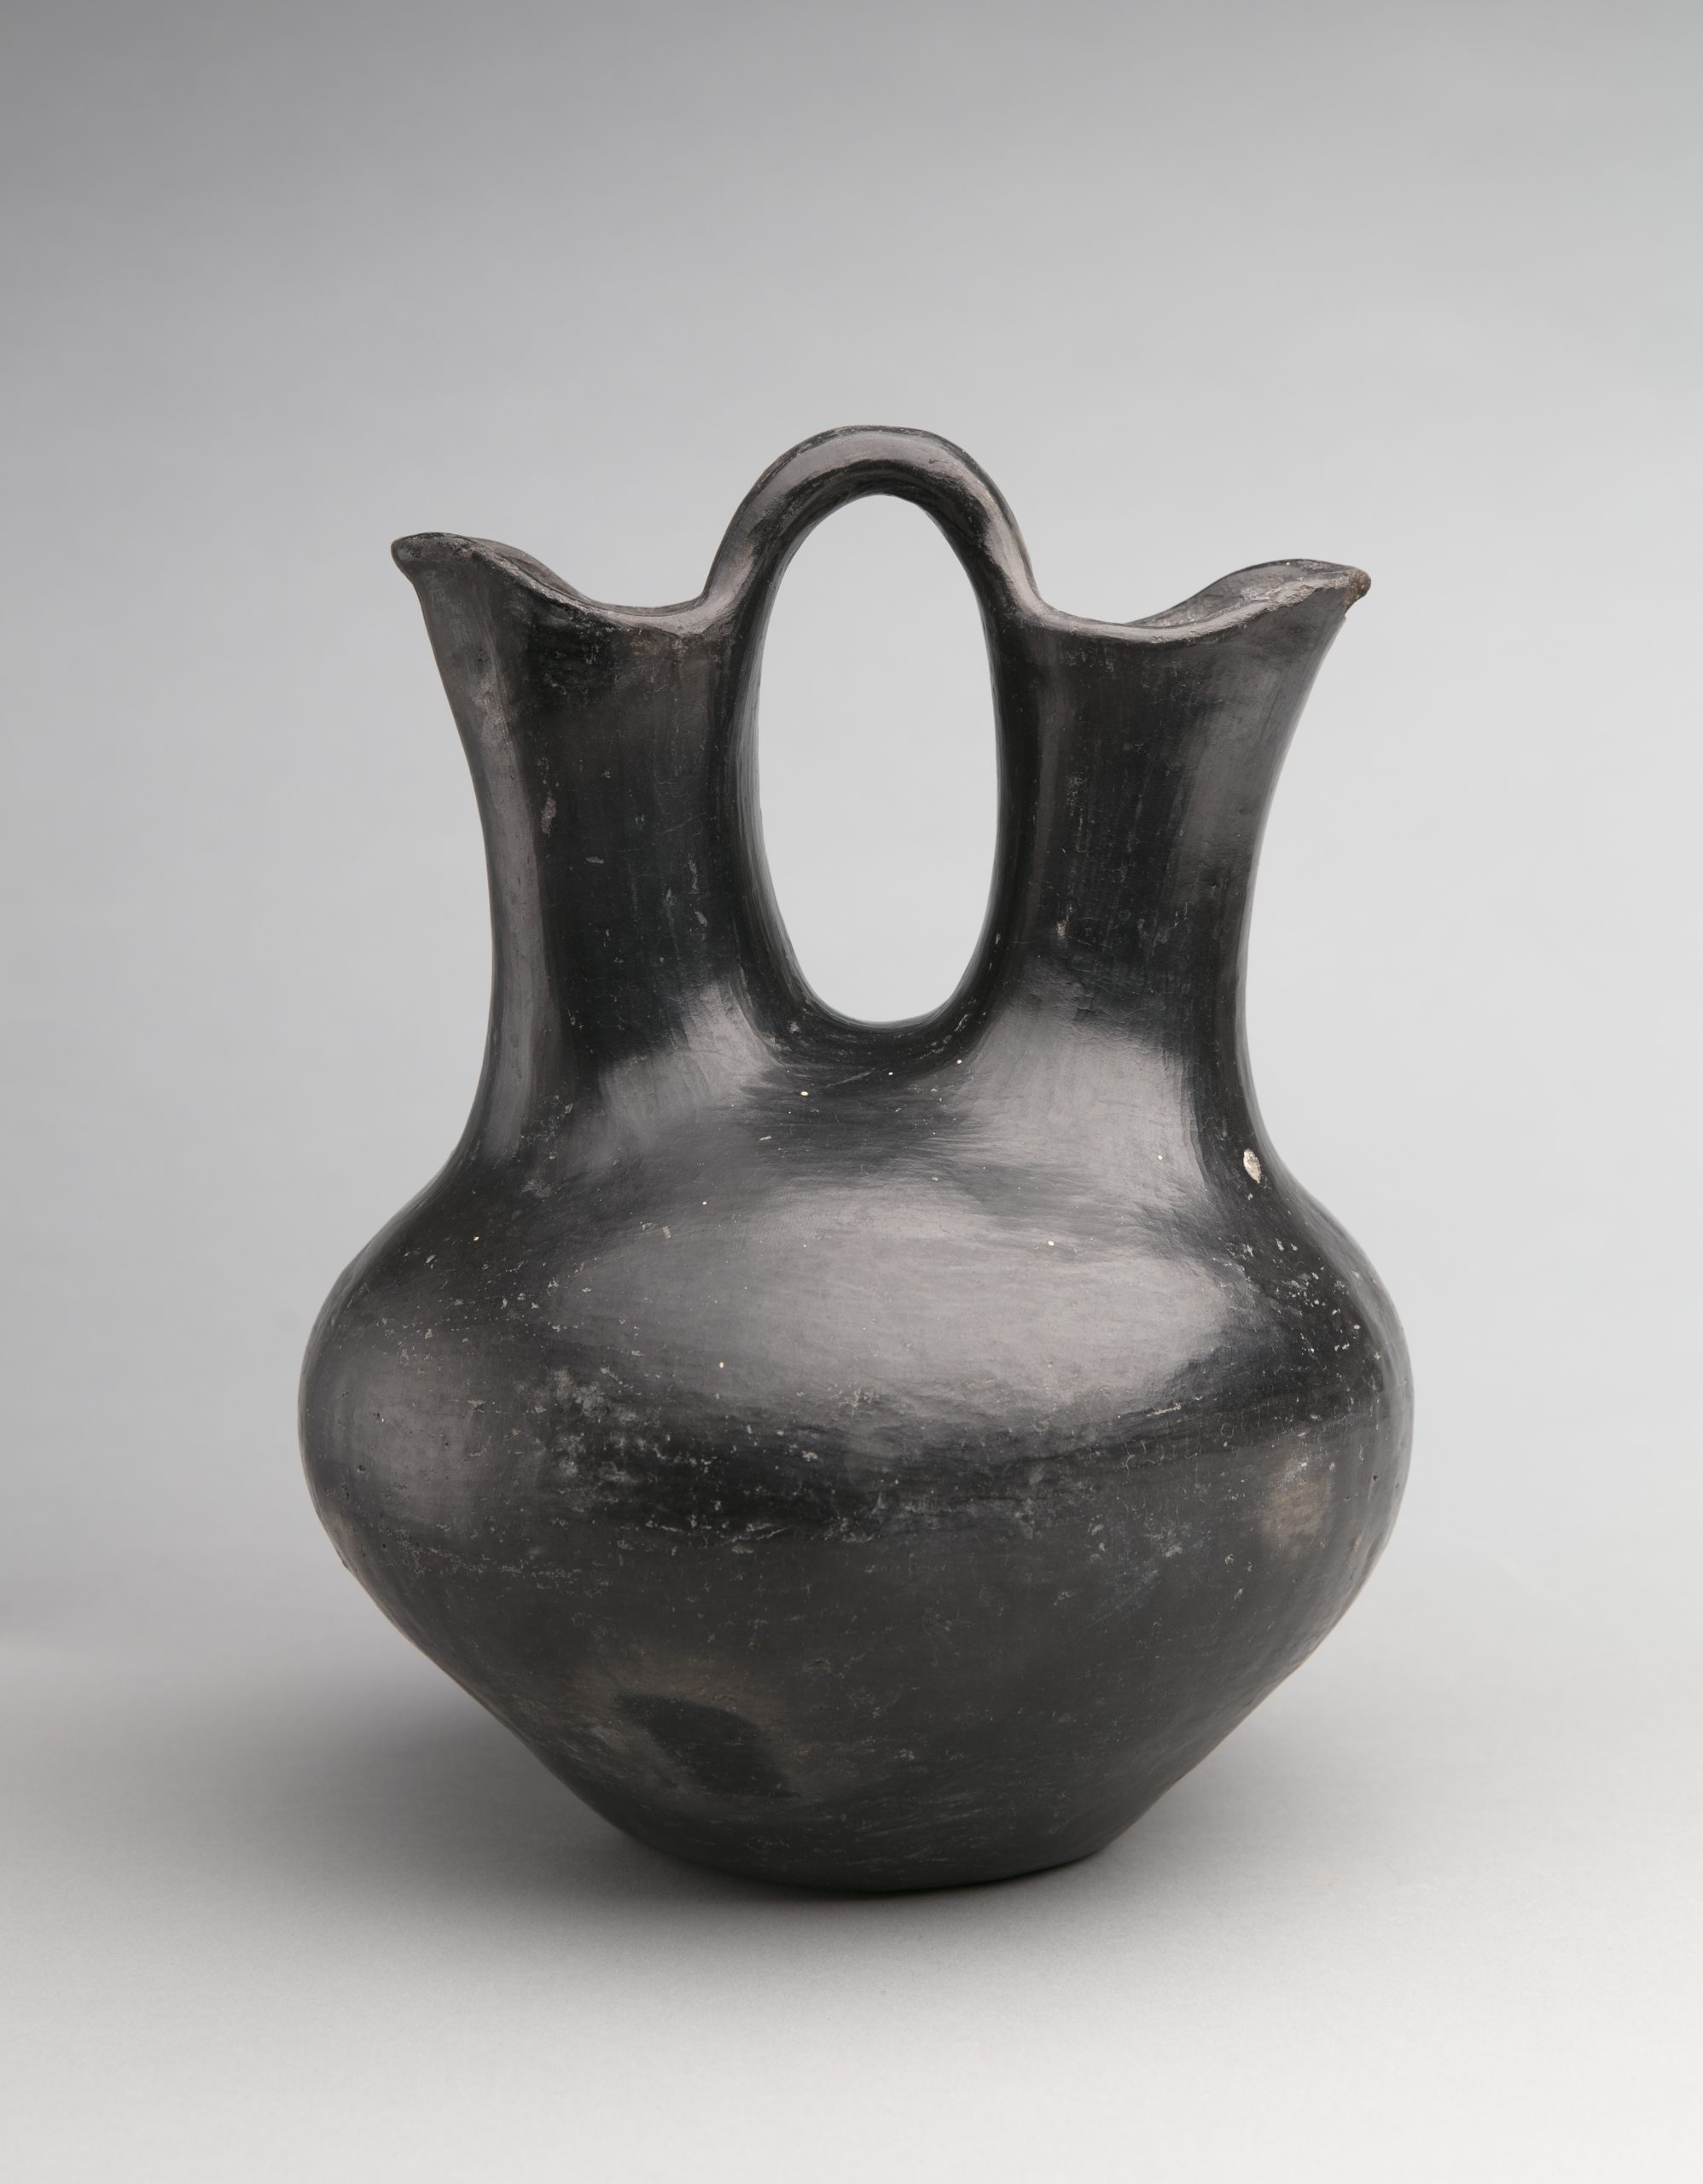 Wedding vase, Artist unknown (Santa Clara Pueblo), c. 1900, clay, 8” x 10 ½”. Cat. no. IAF.2140. Photo by Addison Doty.